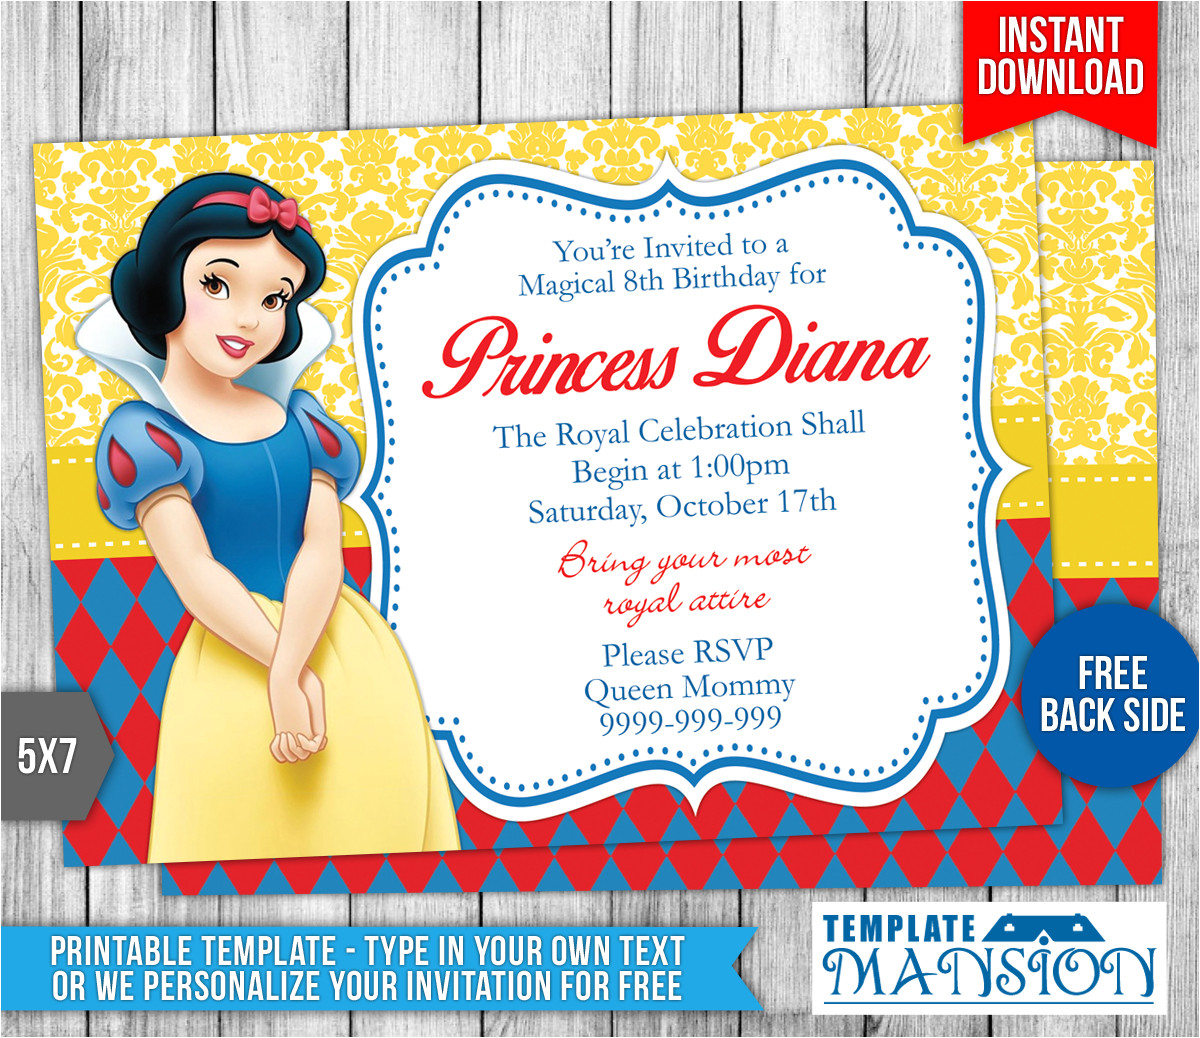 Snow White Birthday Invitation Template Snow White Birthday Invitation Template 3 by